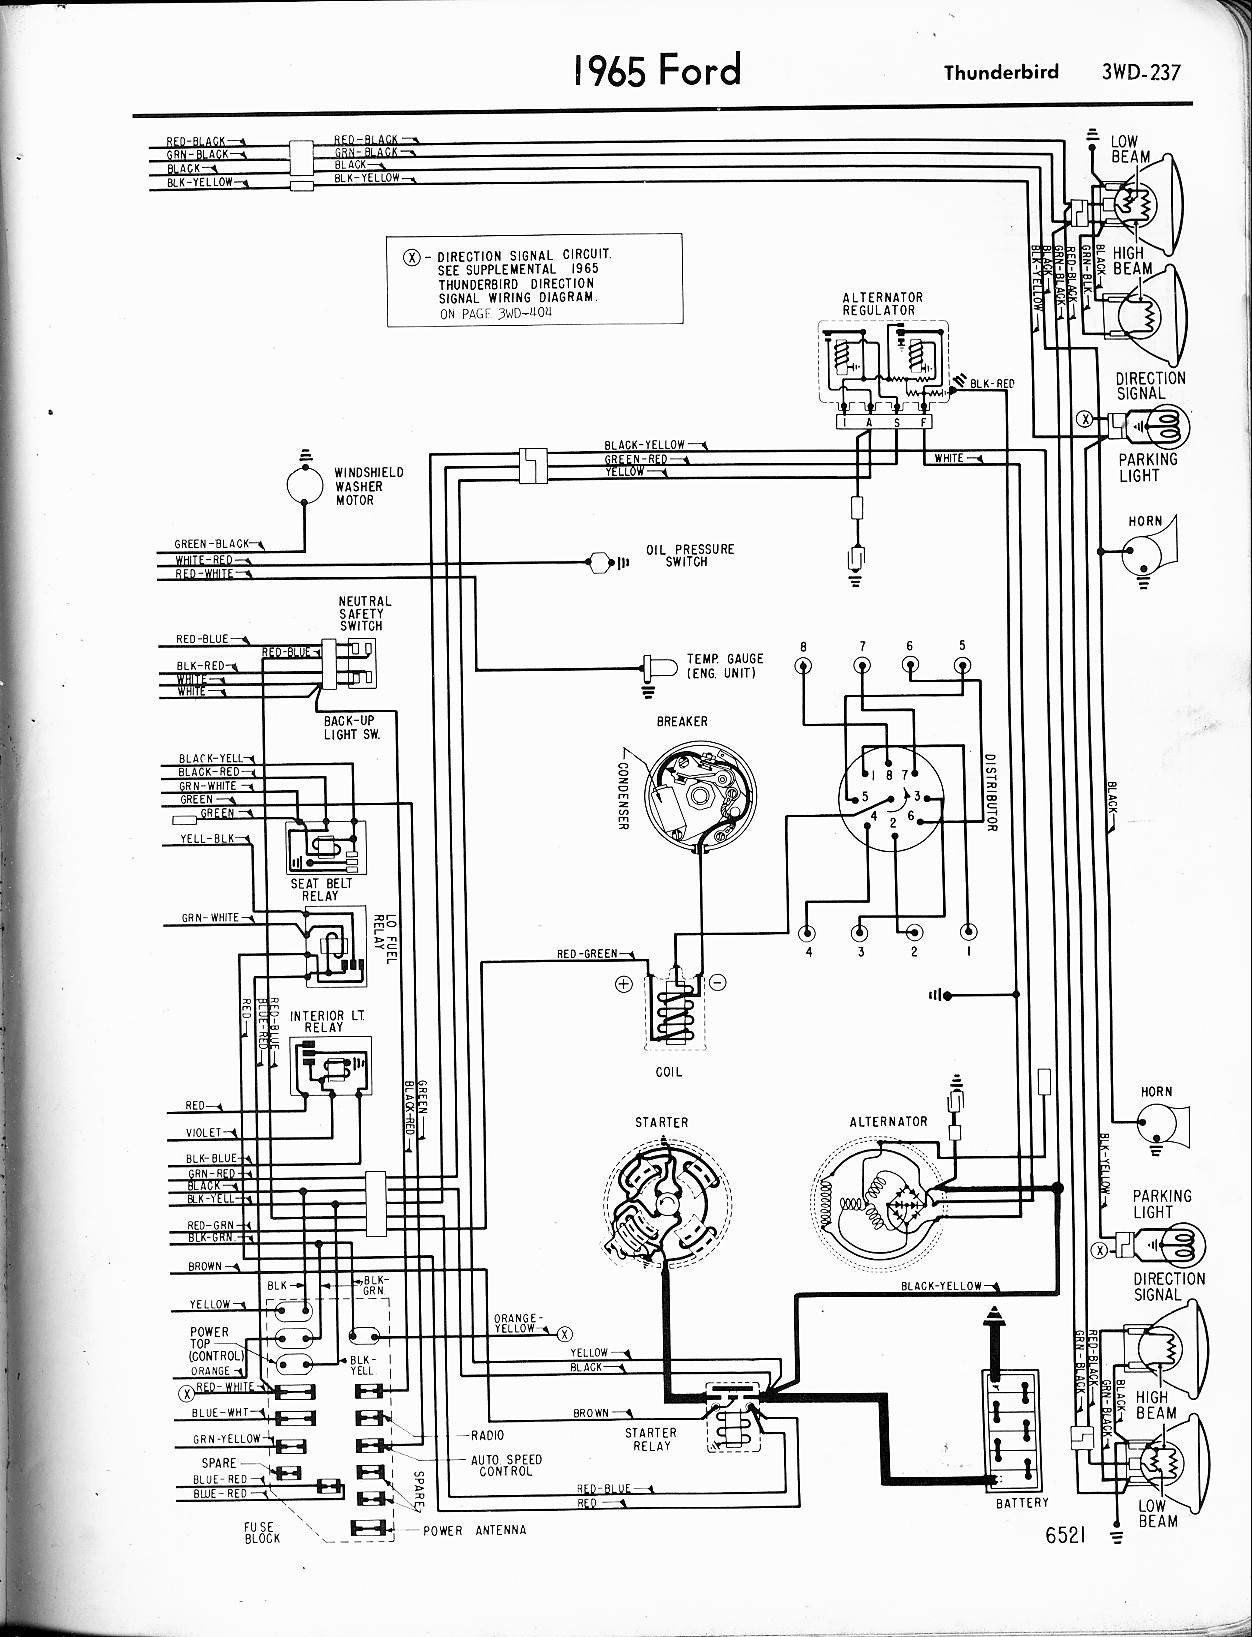 Wiring Diagram for Car Alternator New Wiring Diagram Car Voltage Regulator Save Wiring Diagram Alternator